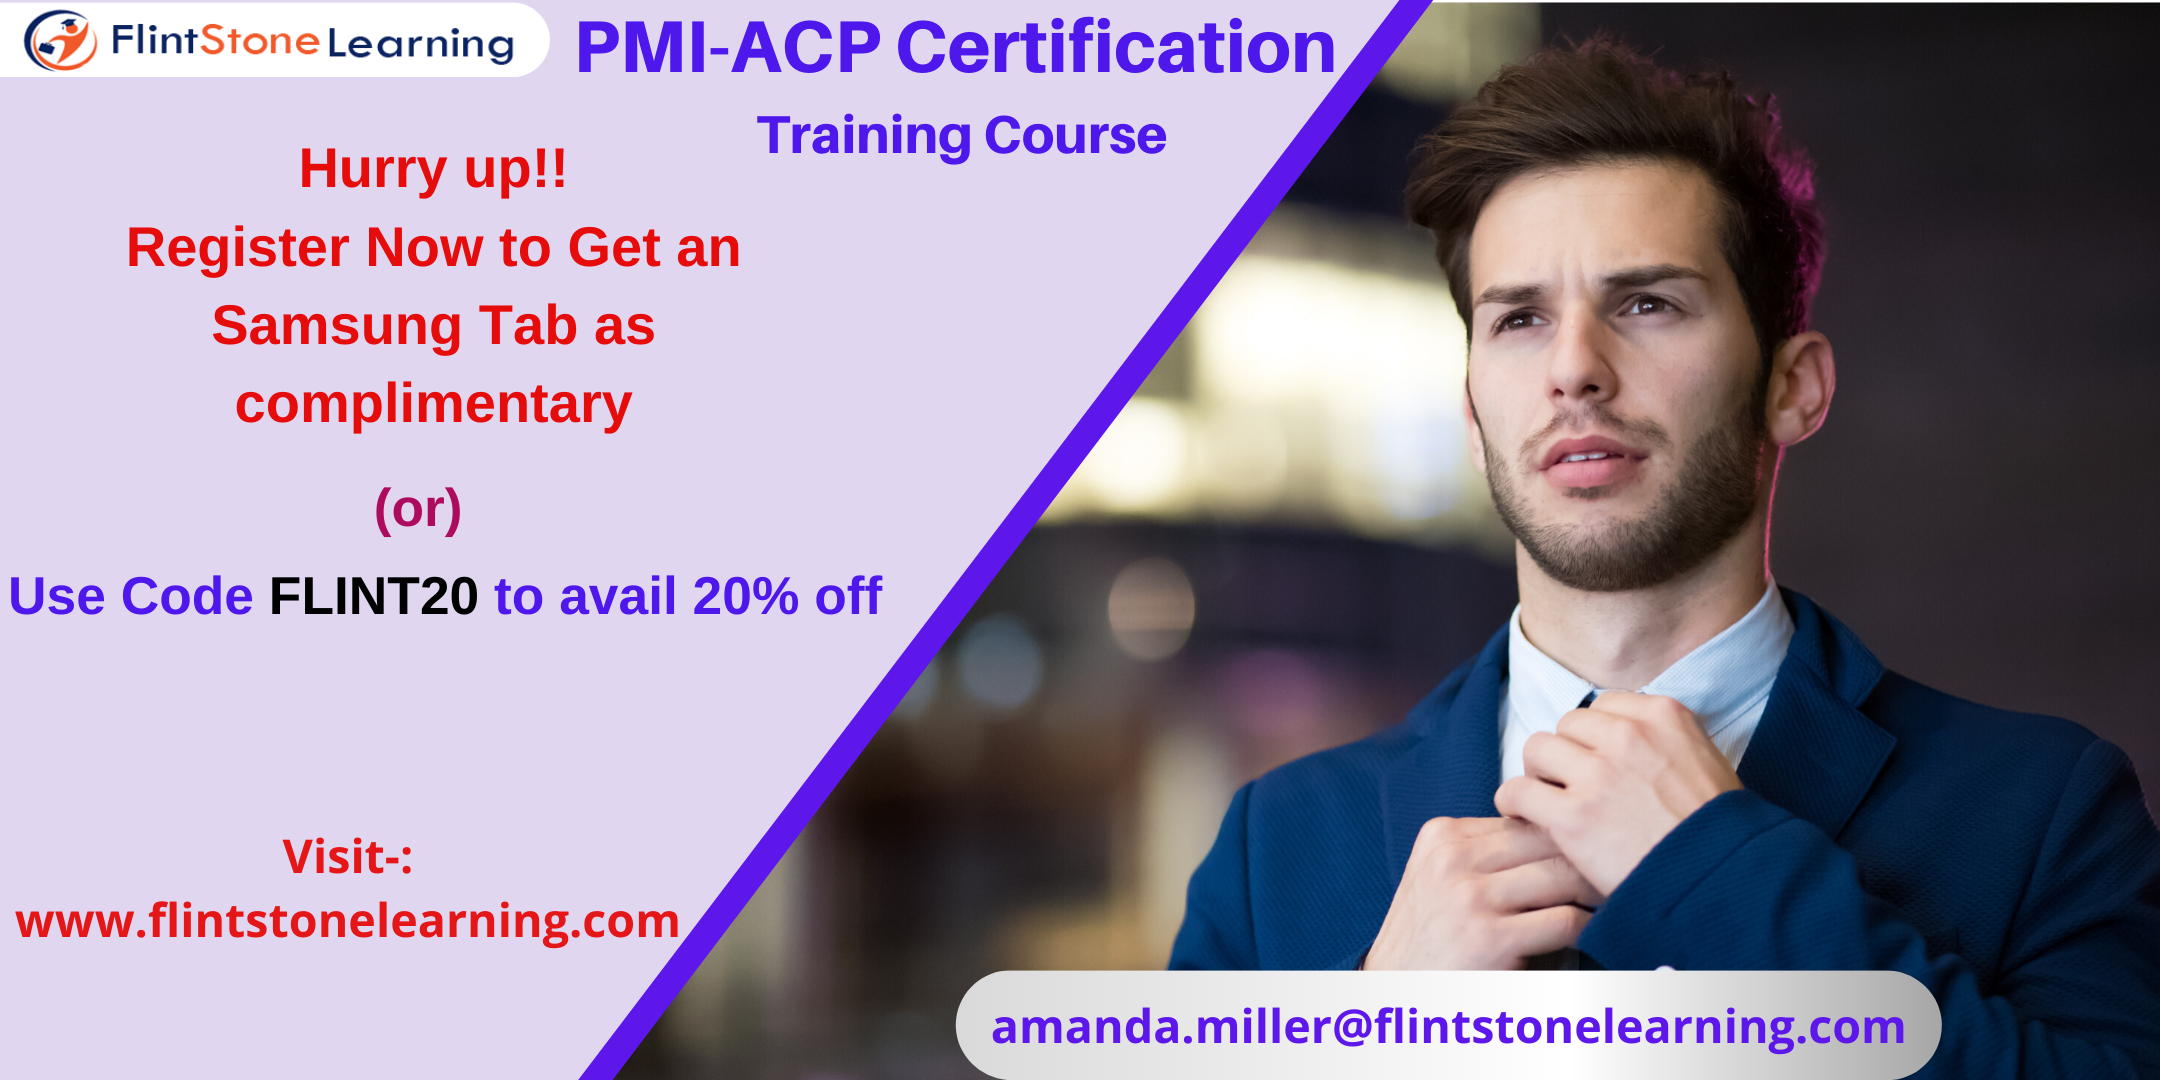 PMI-ACP Certification Training Course in Birmingham, AL